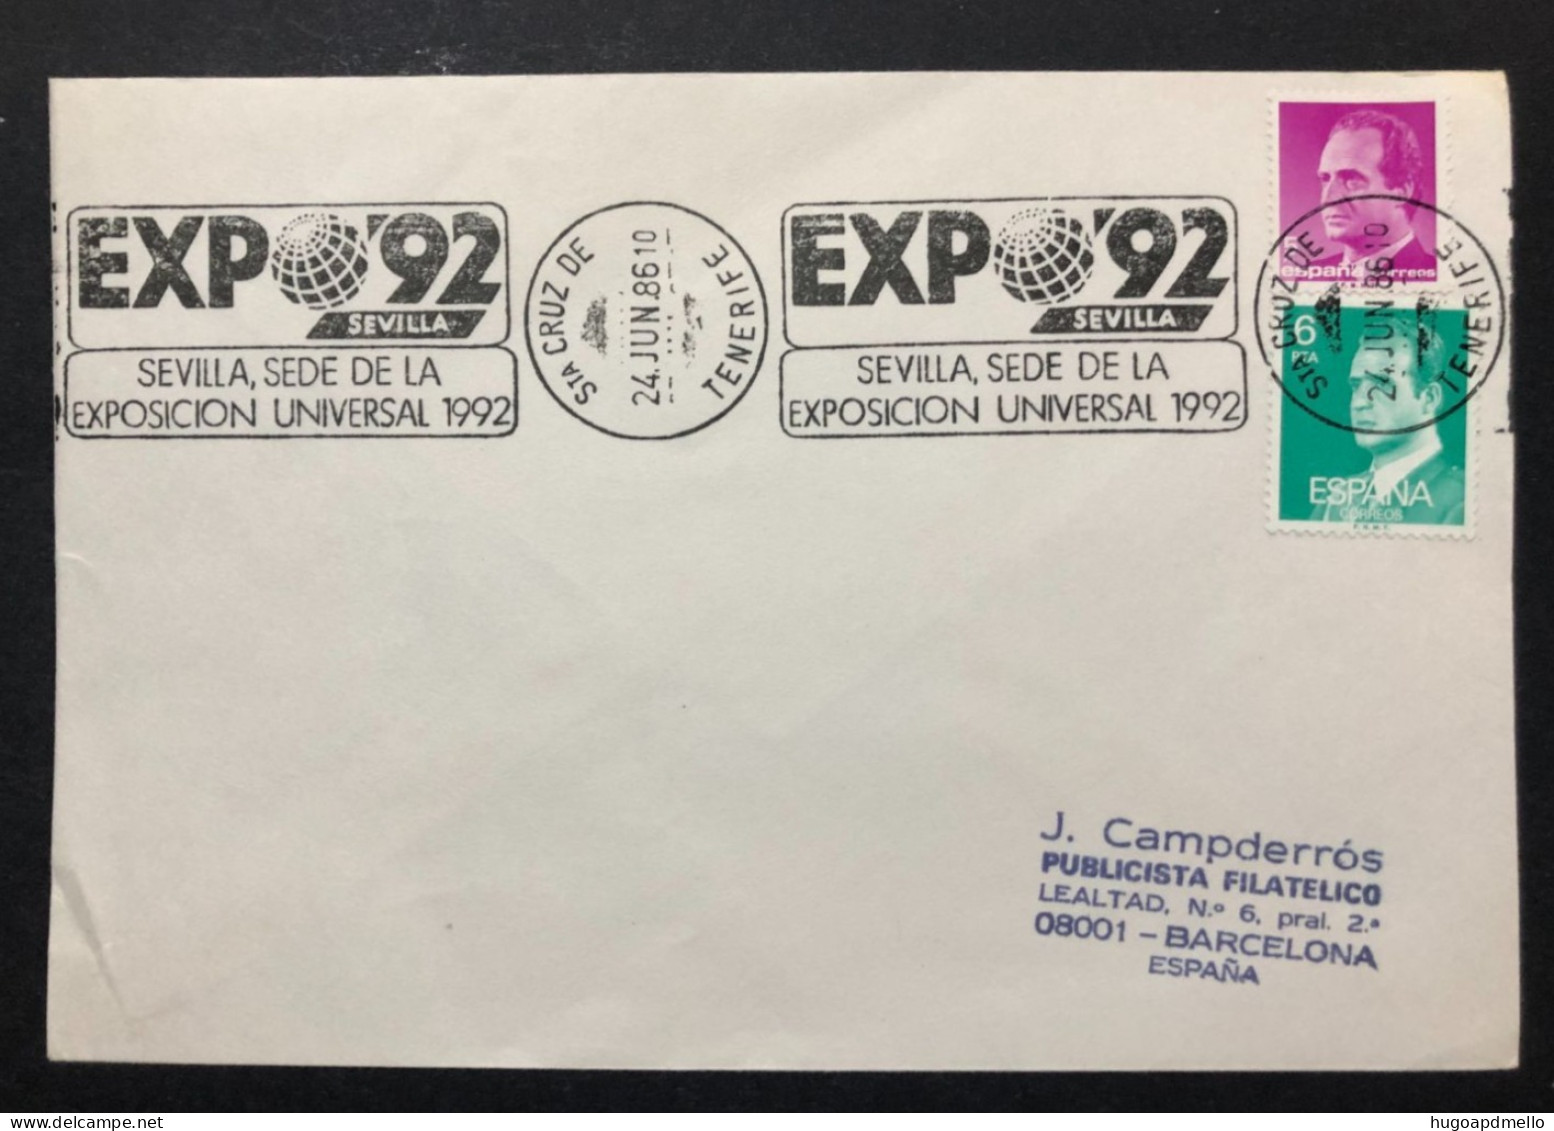 SPAIN, Cover With Special Cancellation « EXPO '92 », « STA. CRUZ DE TENERIFE Postmark », 1986 - 1992 – Séville (Espagne)